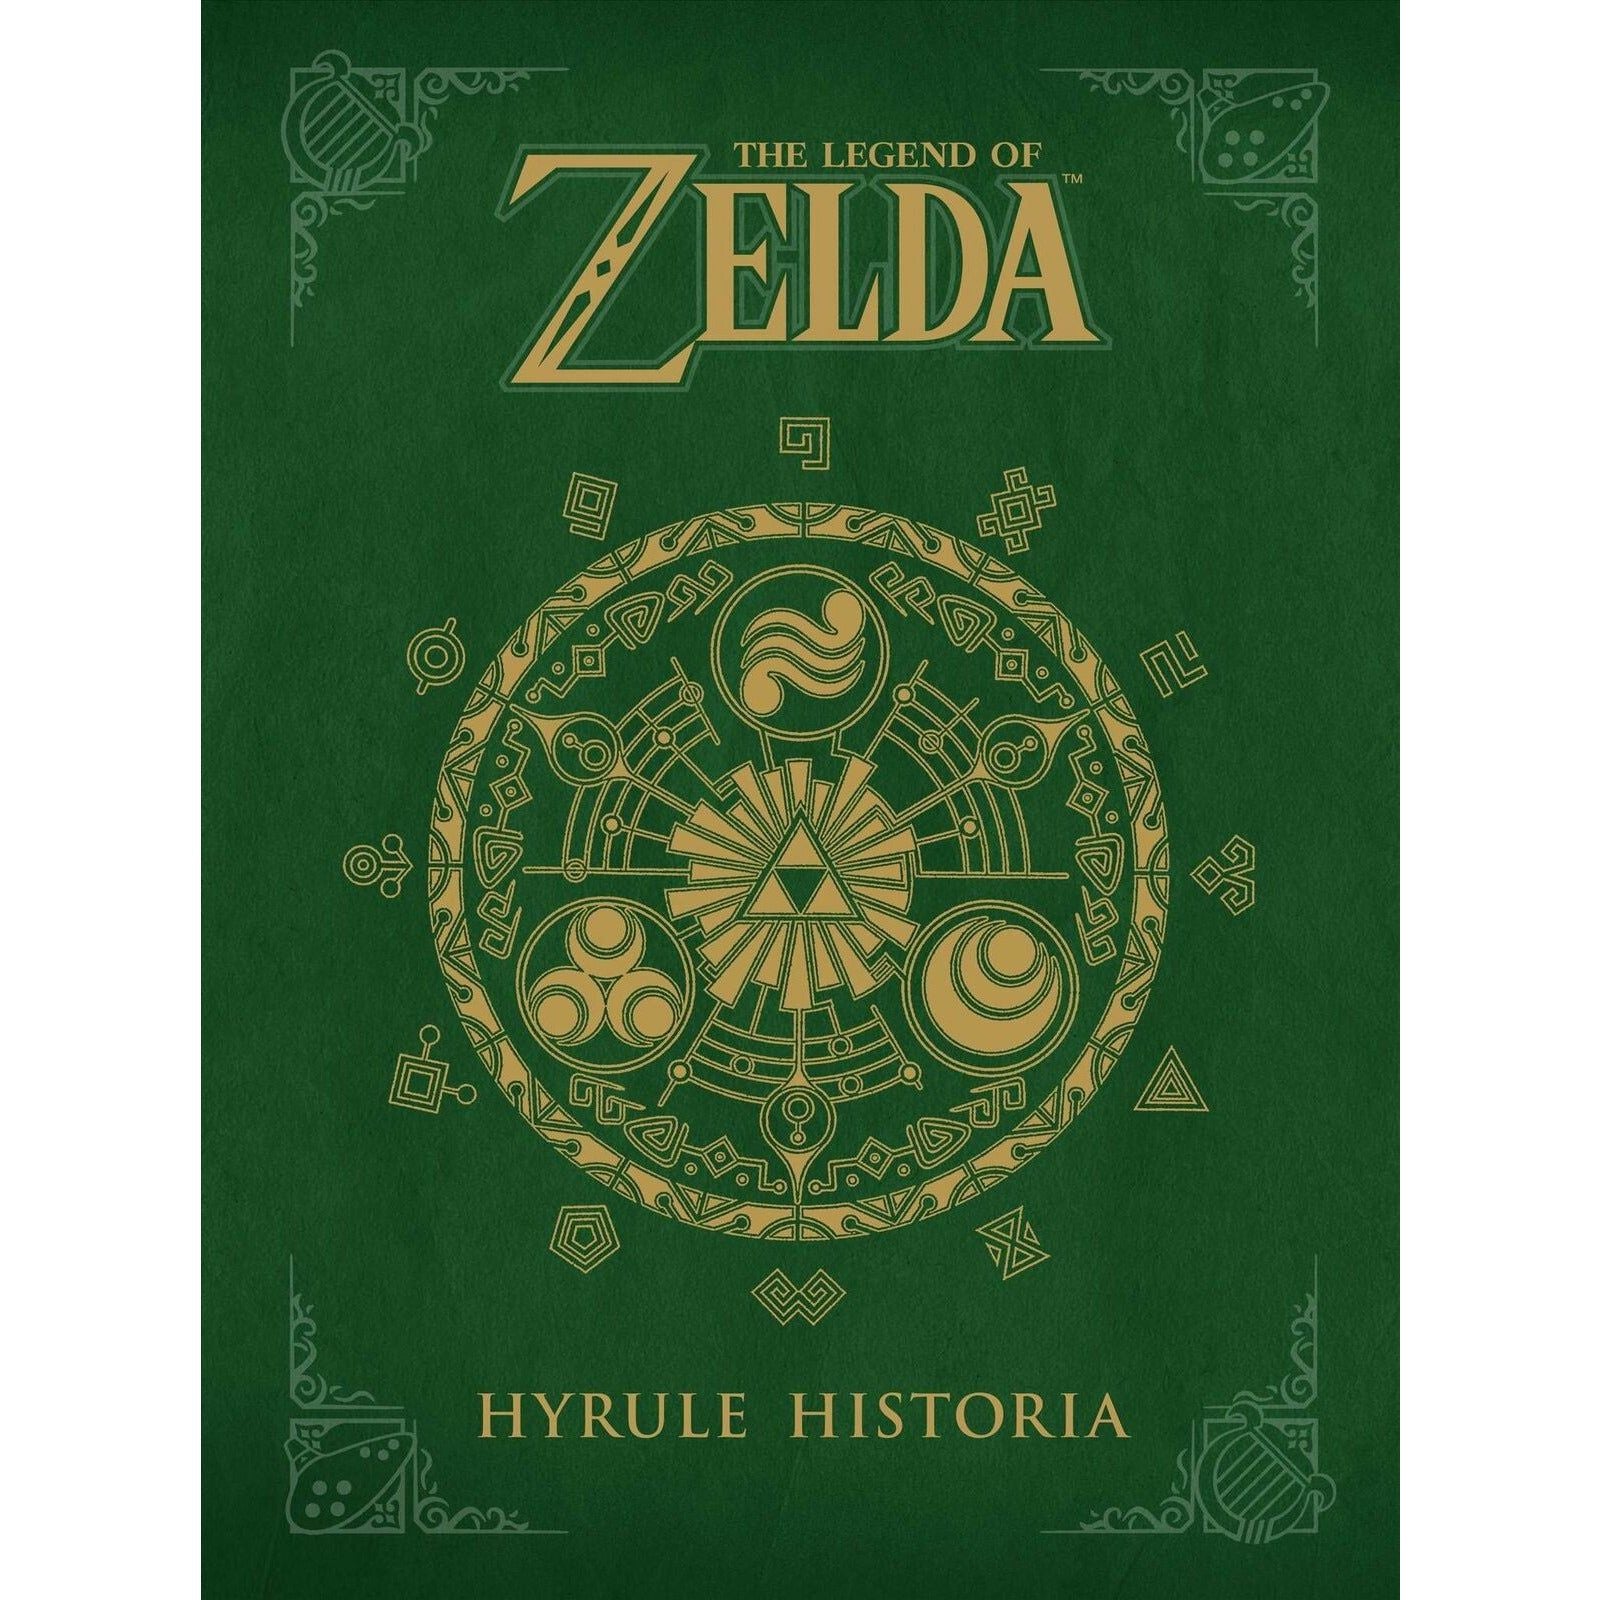 Book - The Legend of Zelda Hyrule Historia Hardcover